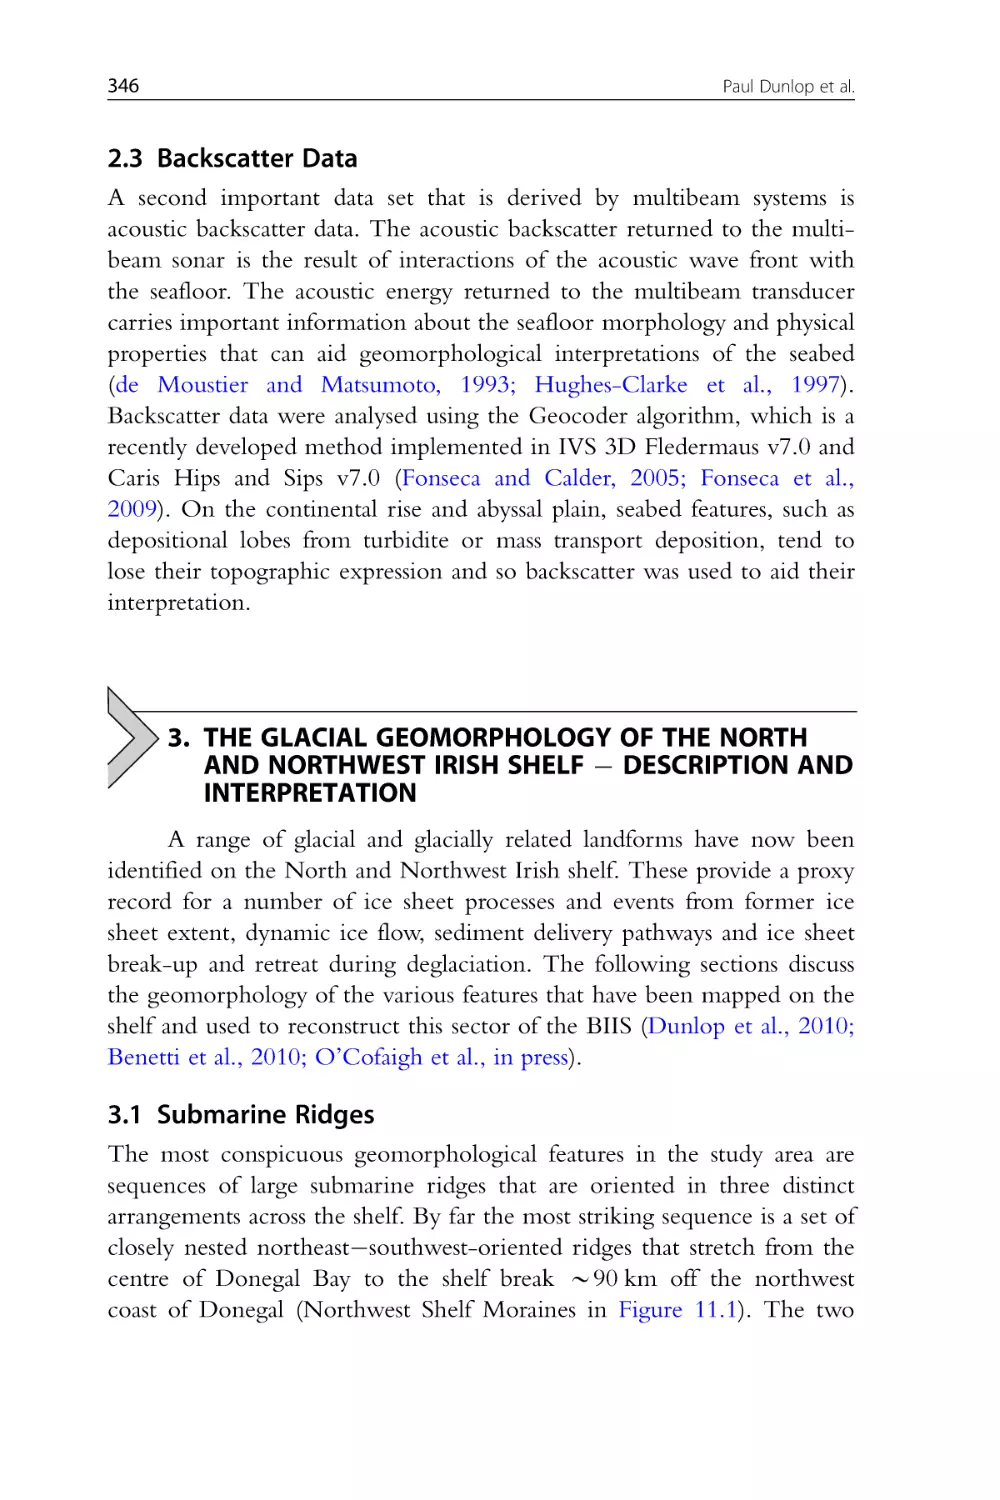 2.3 Backscatter Data
3. The Glacial Geomorphology of the North and Northwest Irish Shelf – Description and Interpretation
3.1 Submarine Ridges